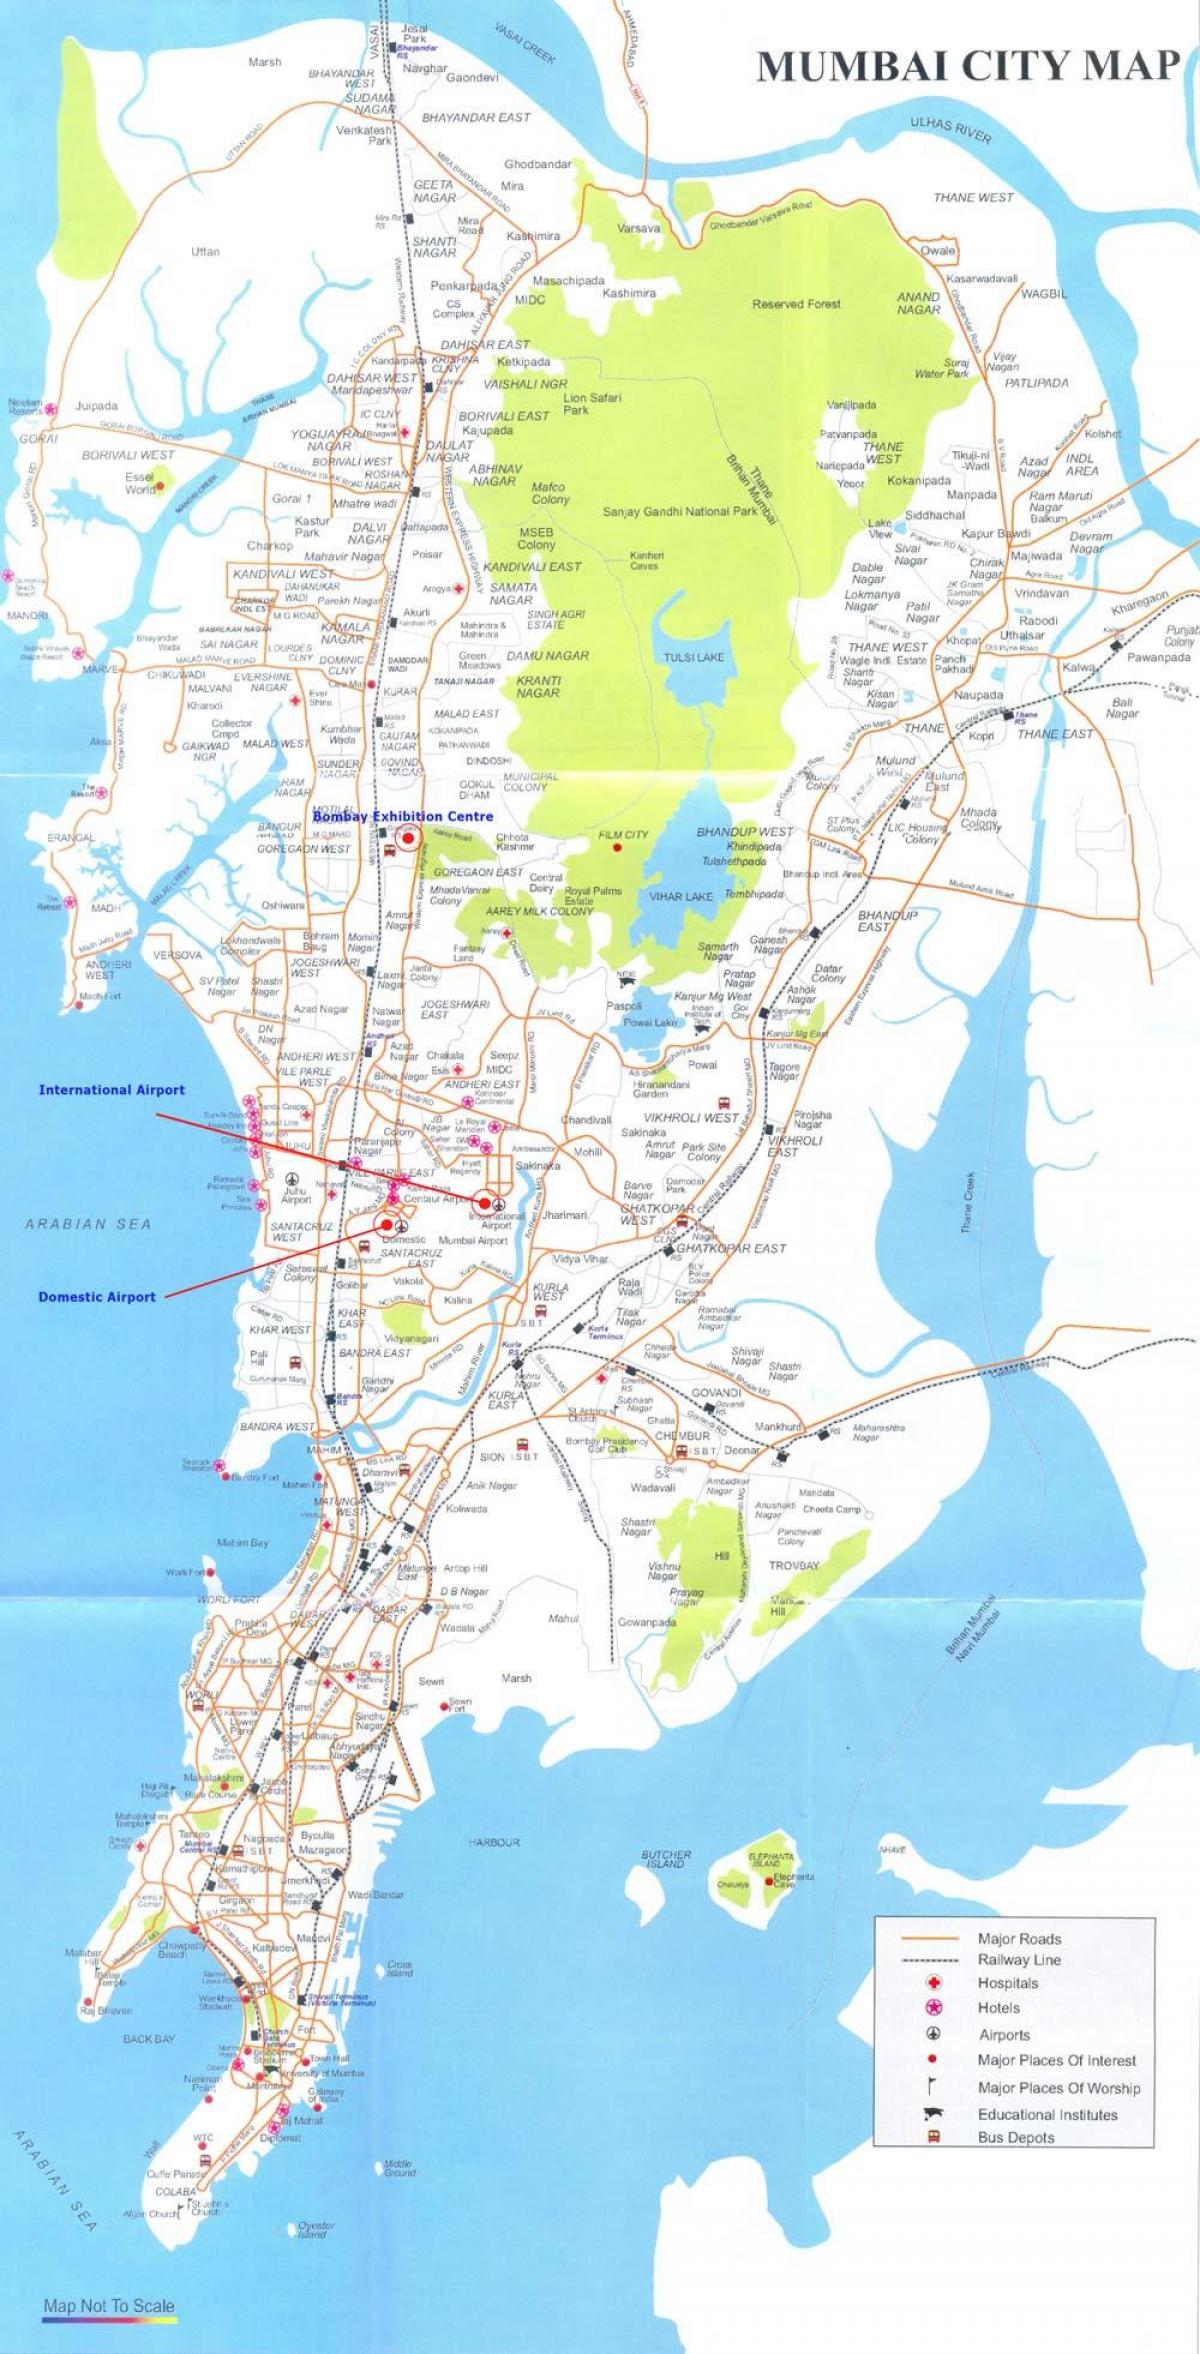 Mumbai kaardil